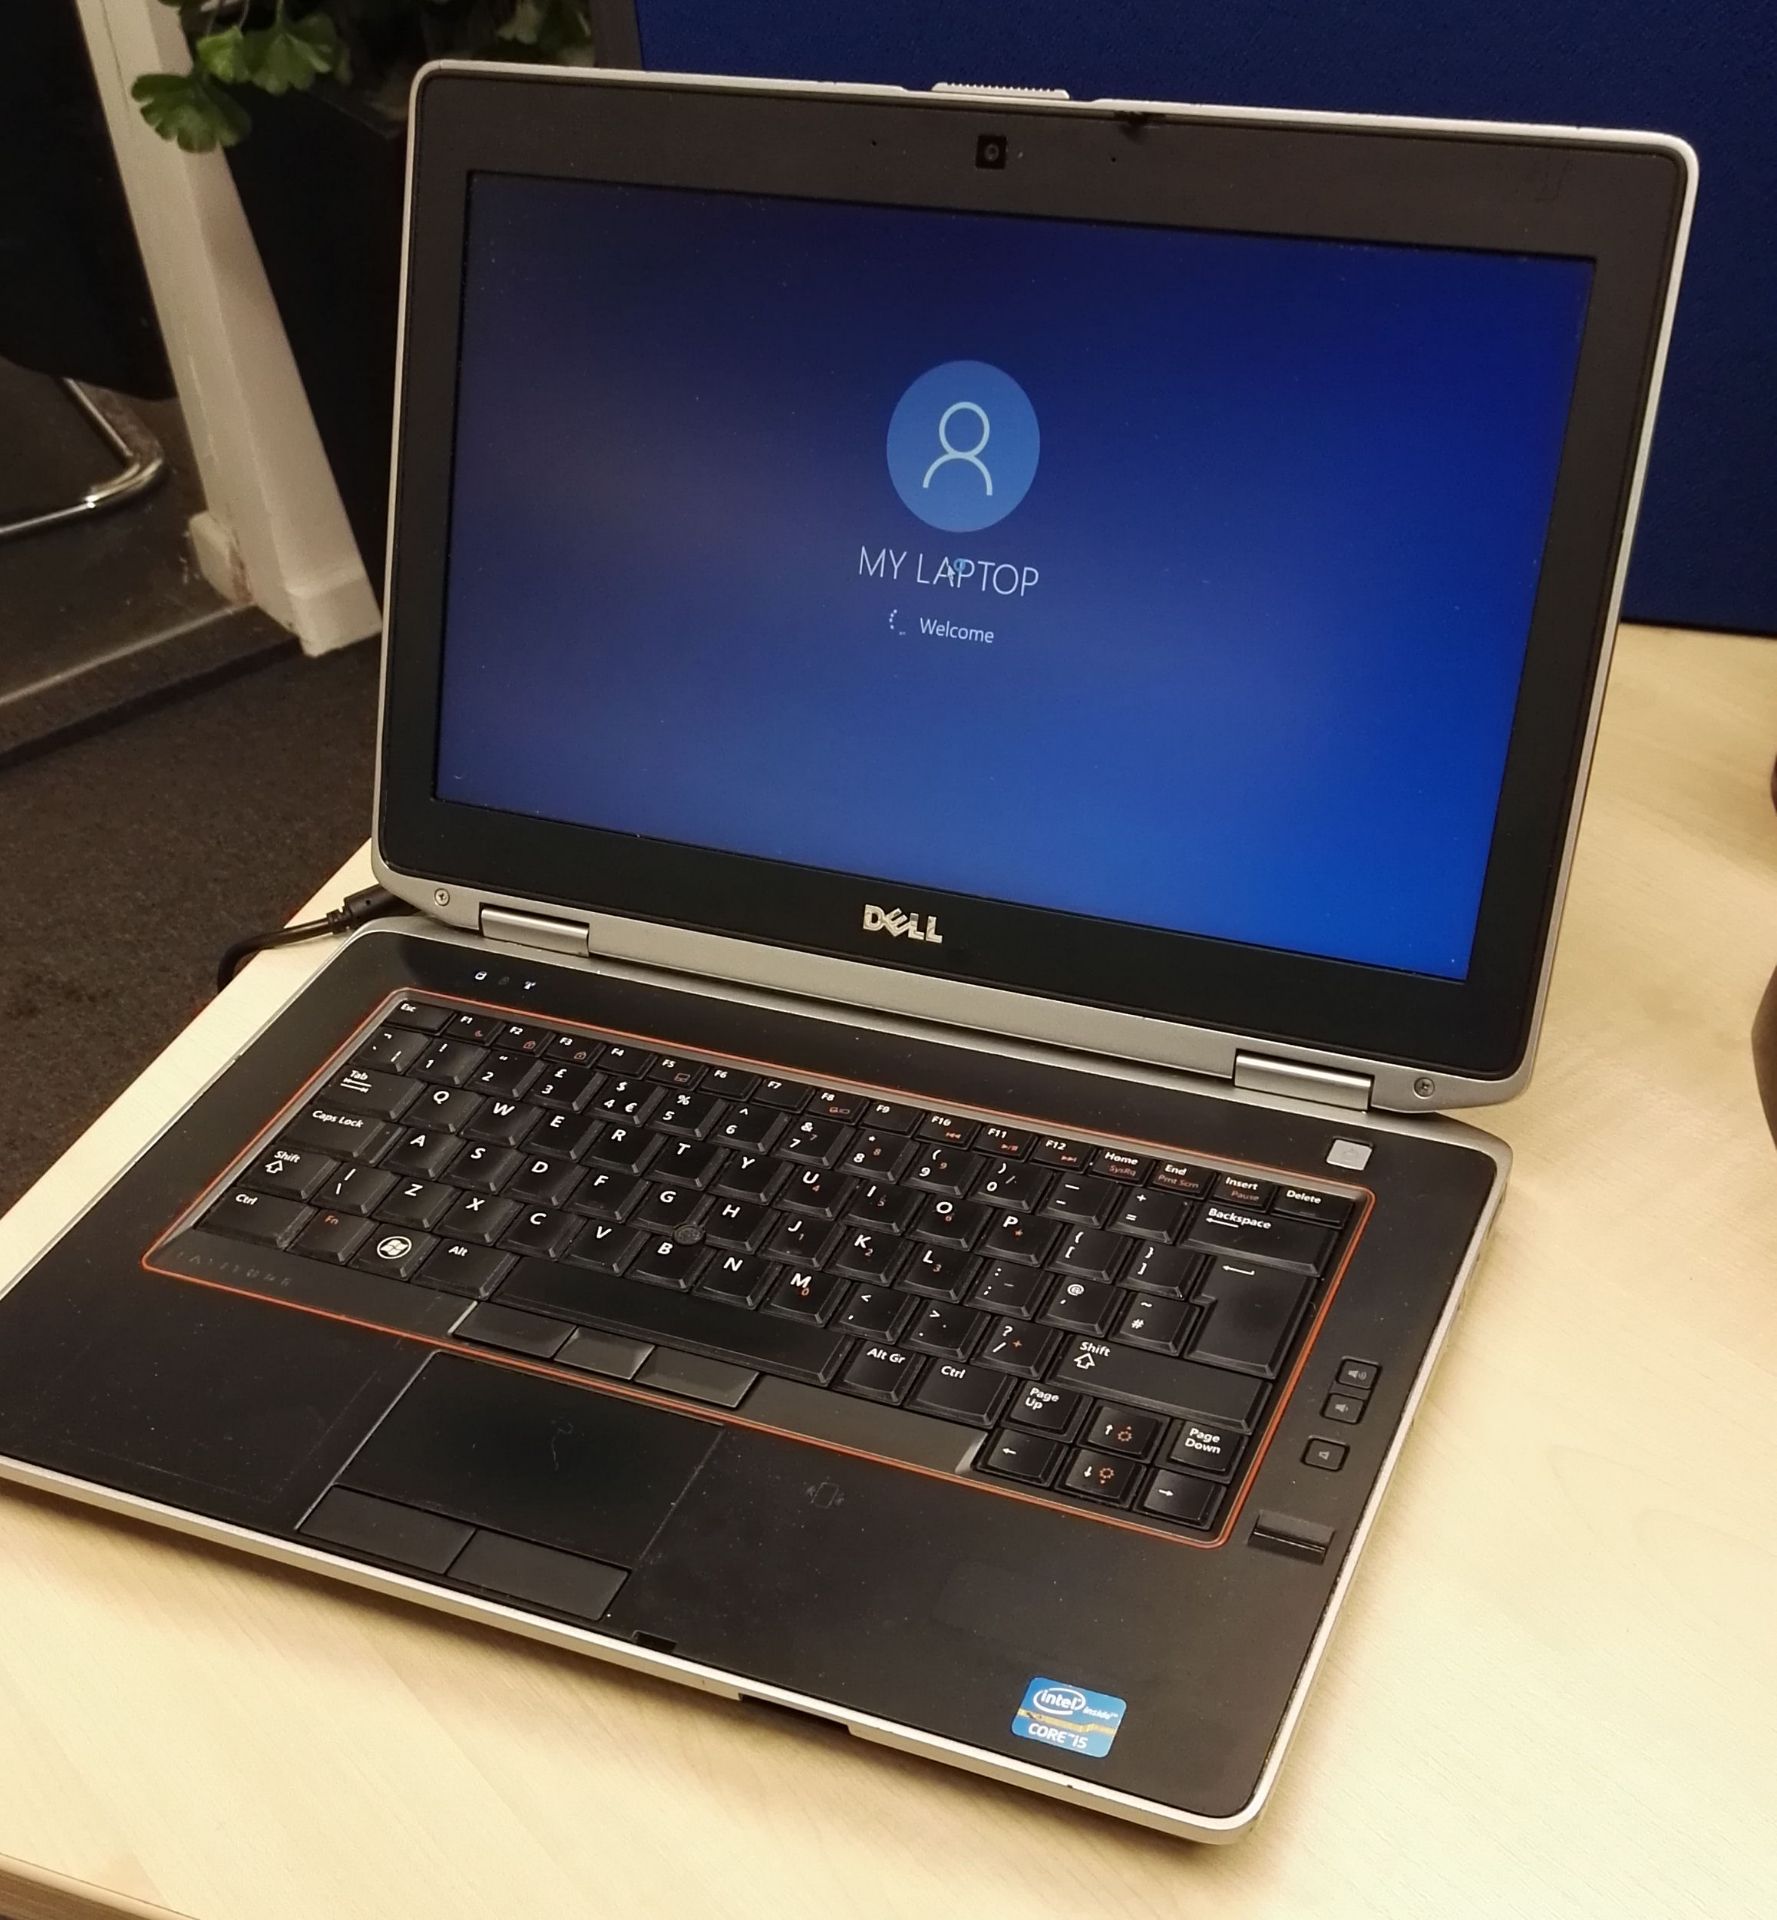 1 x Dell E6420 Latitude Laptop Computer - Features 6gb RAM, 320gb Hard Drive, Intel i5 2.5GHz